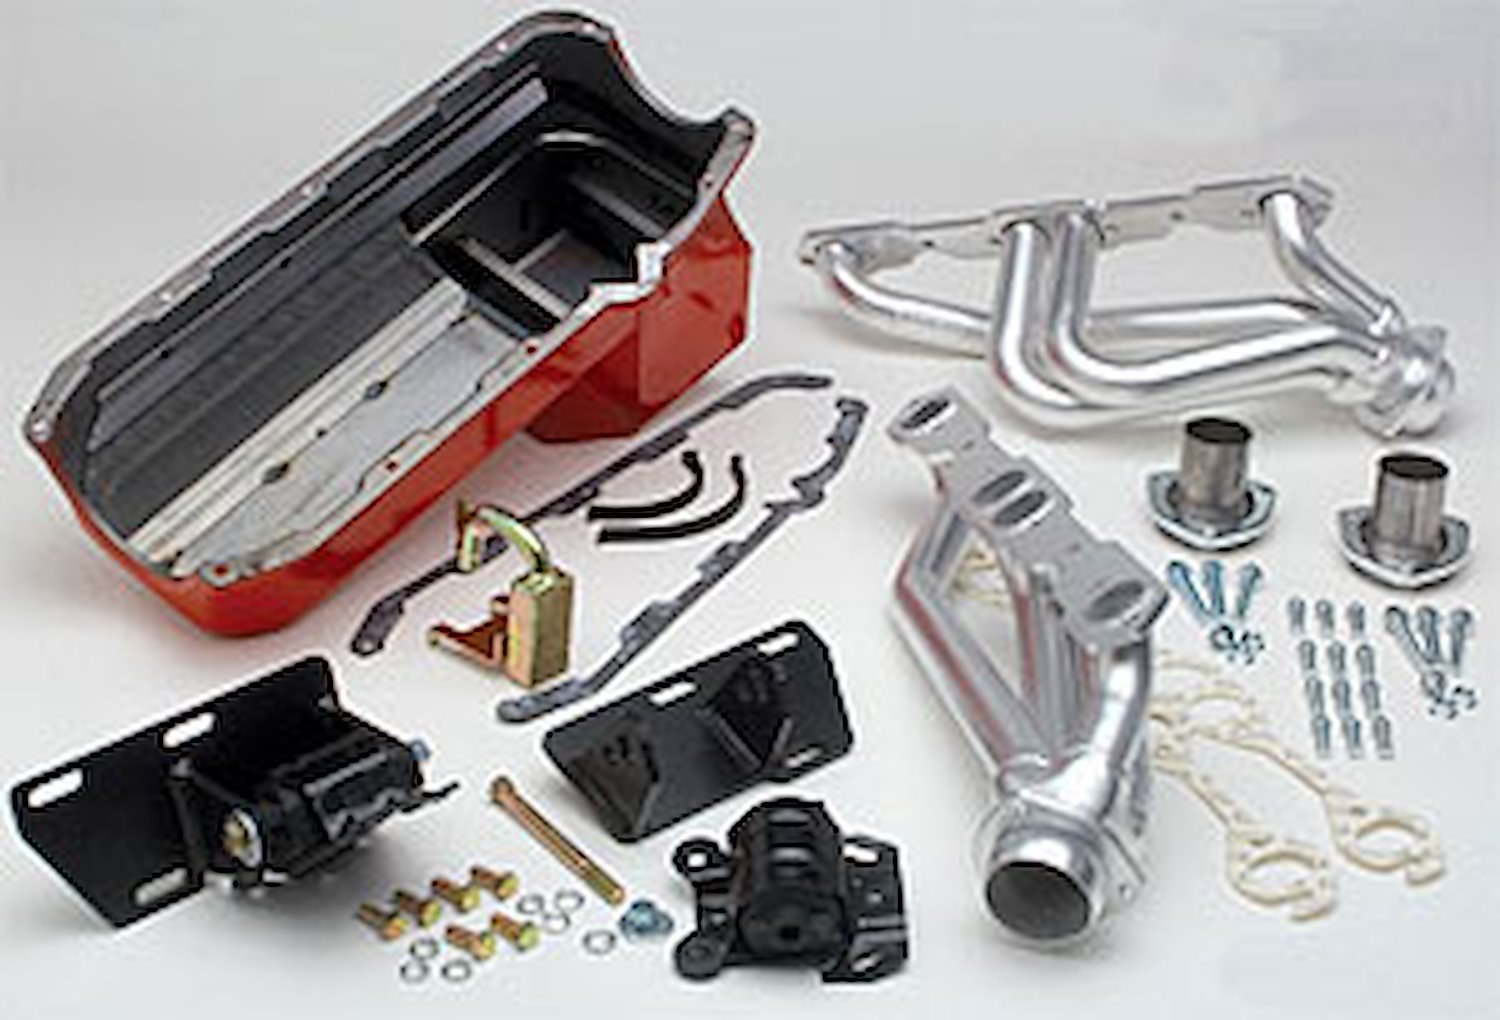 S10/V8 Ceramic Engine Swap Kit for 1982-2004 Chevy S10/Blazer & GMC S15, Jimmy, Sonoma 2WD